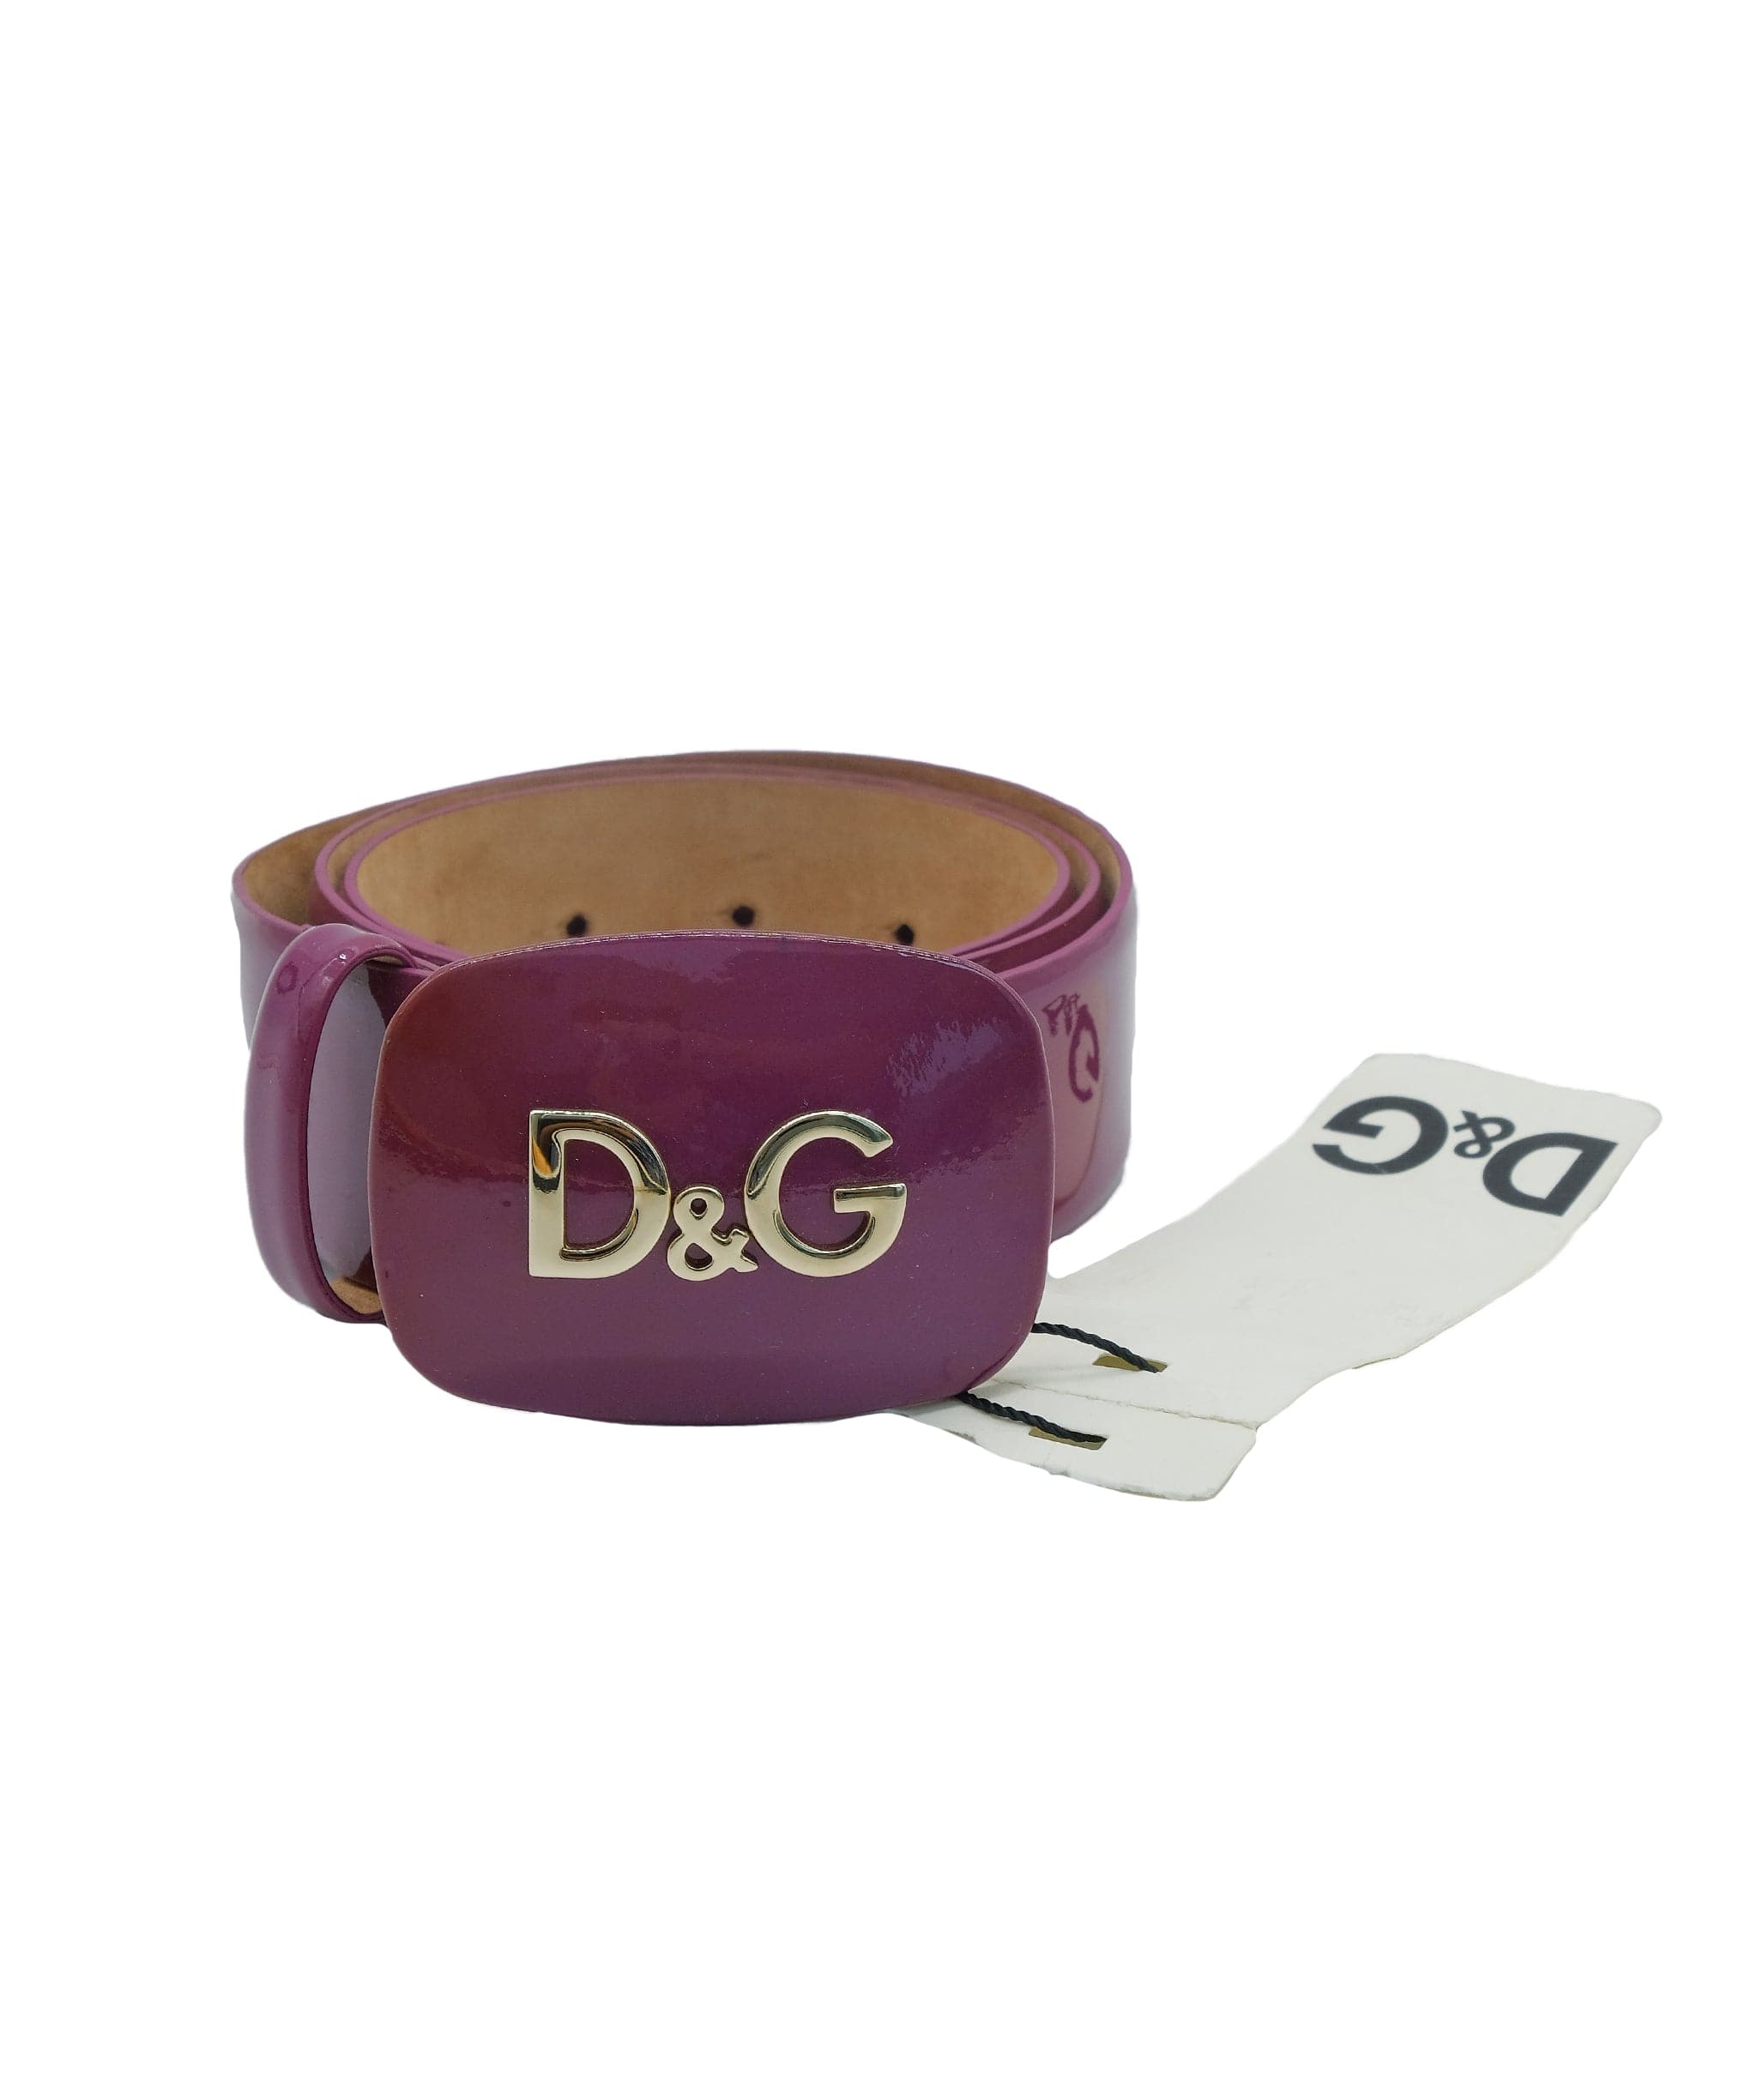 Dolce & Gabbana Dolce & Gabbana Patent Belt RJC2622